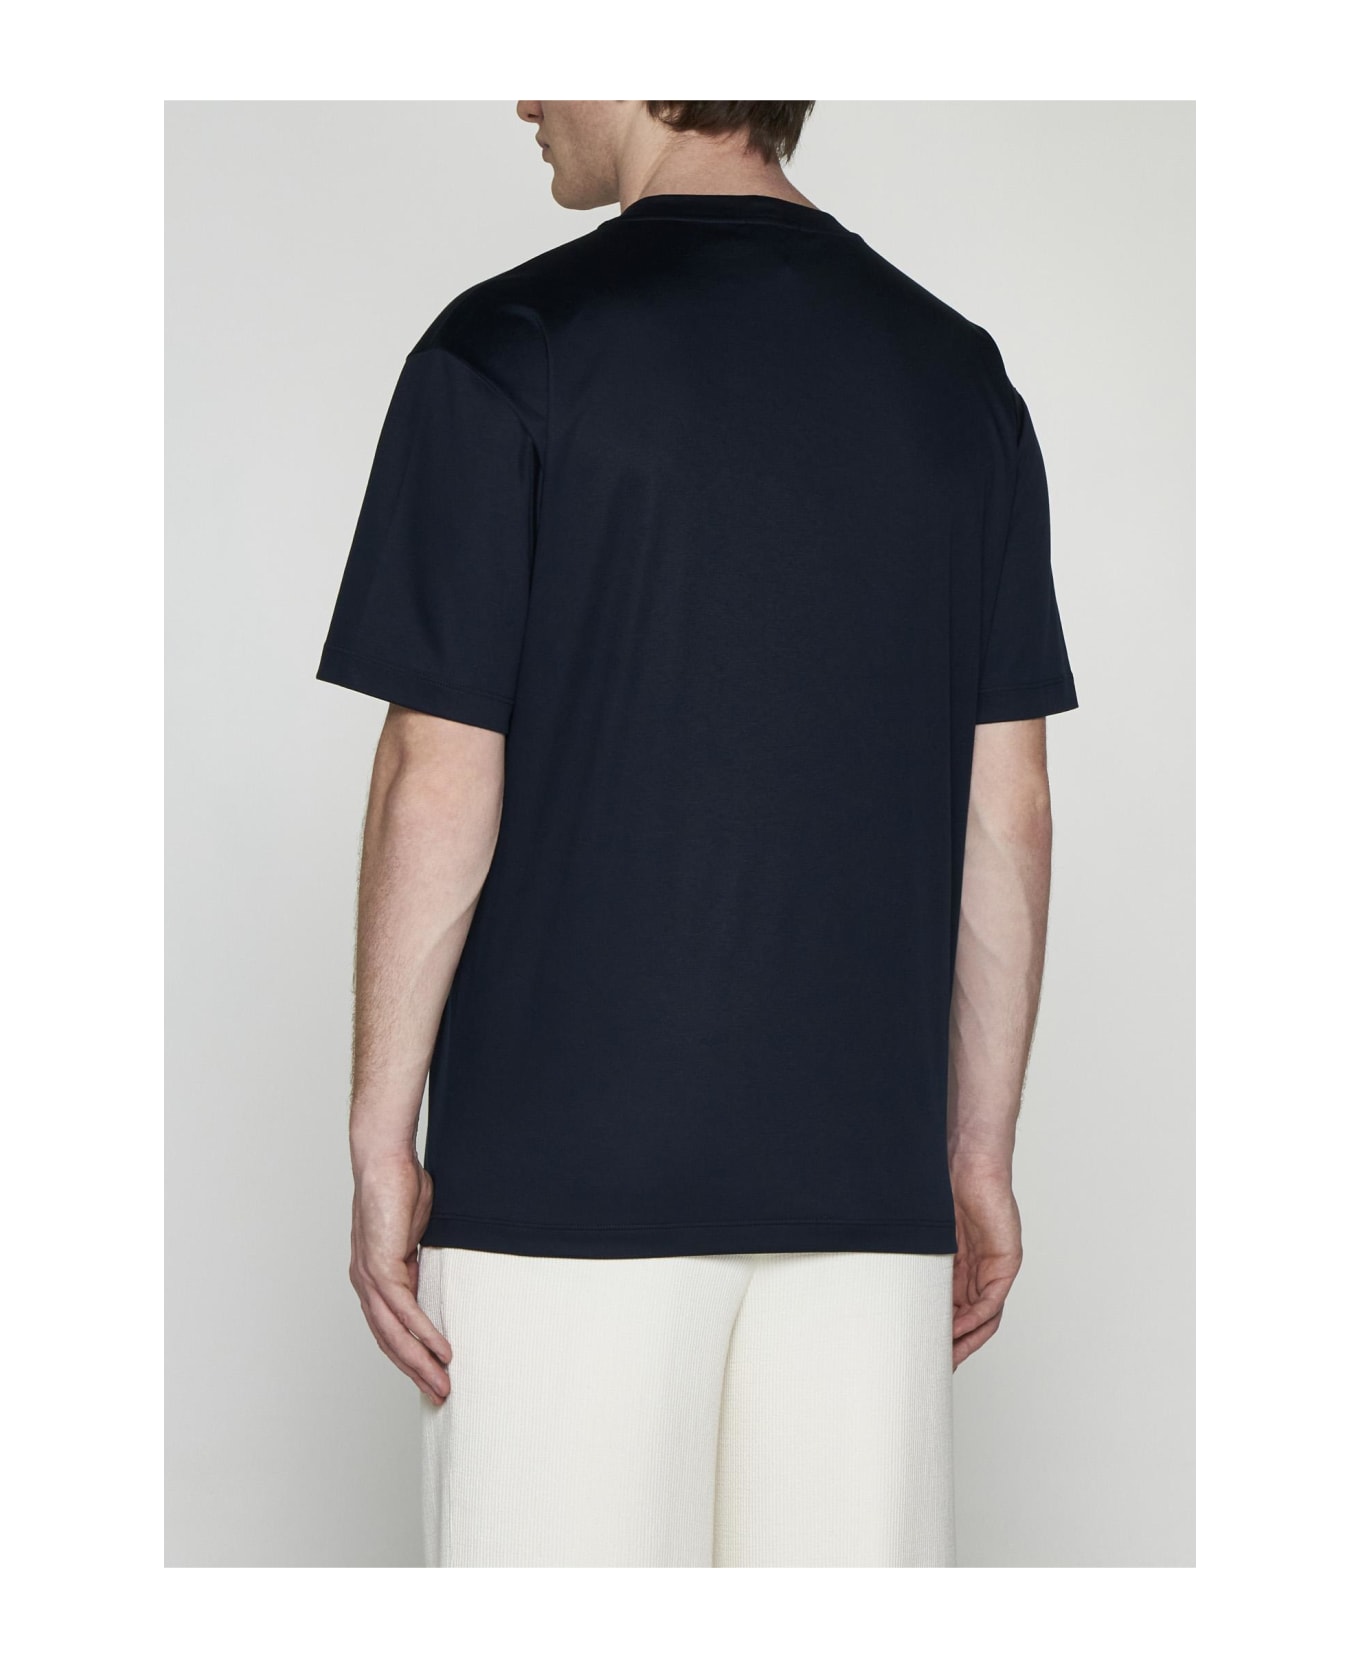 Giorgio Armani Logo Cotton T-shirt - Ubwf